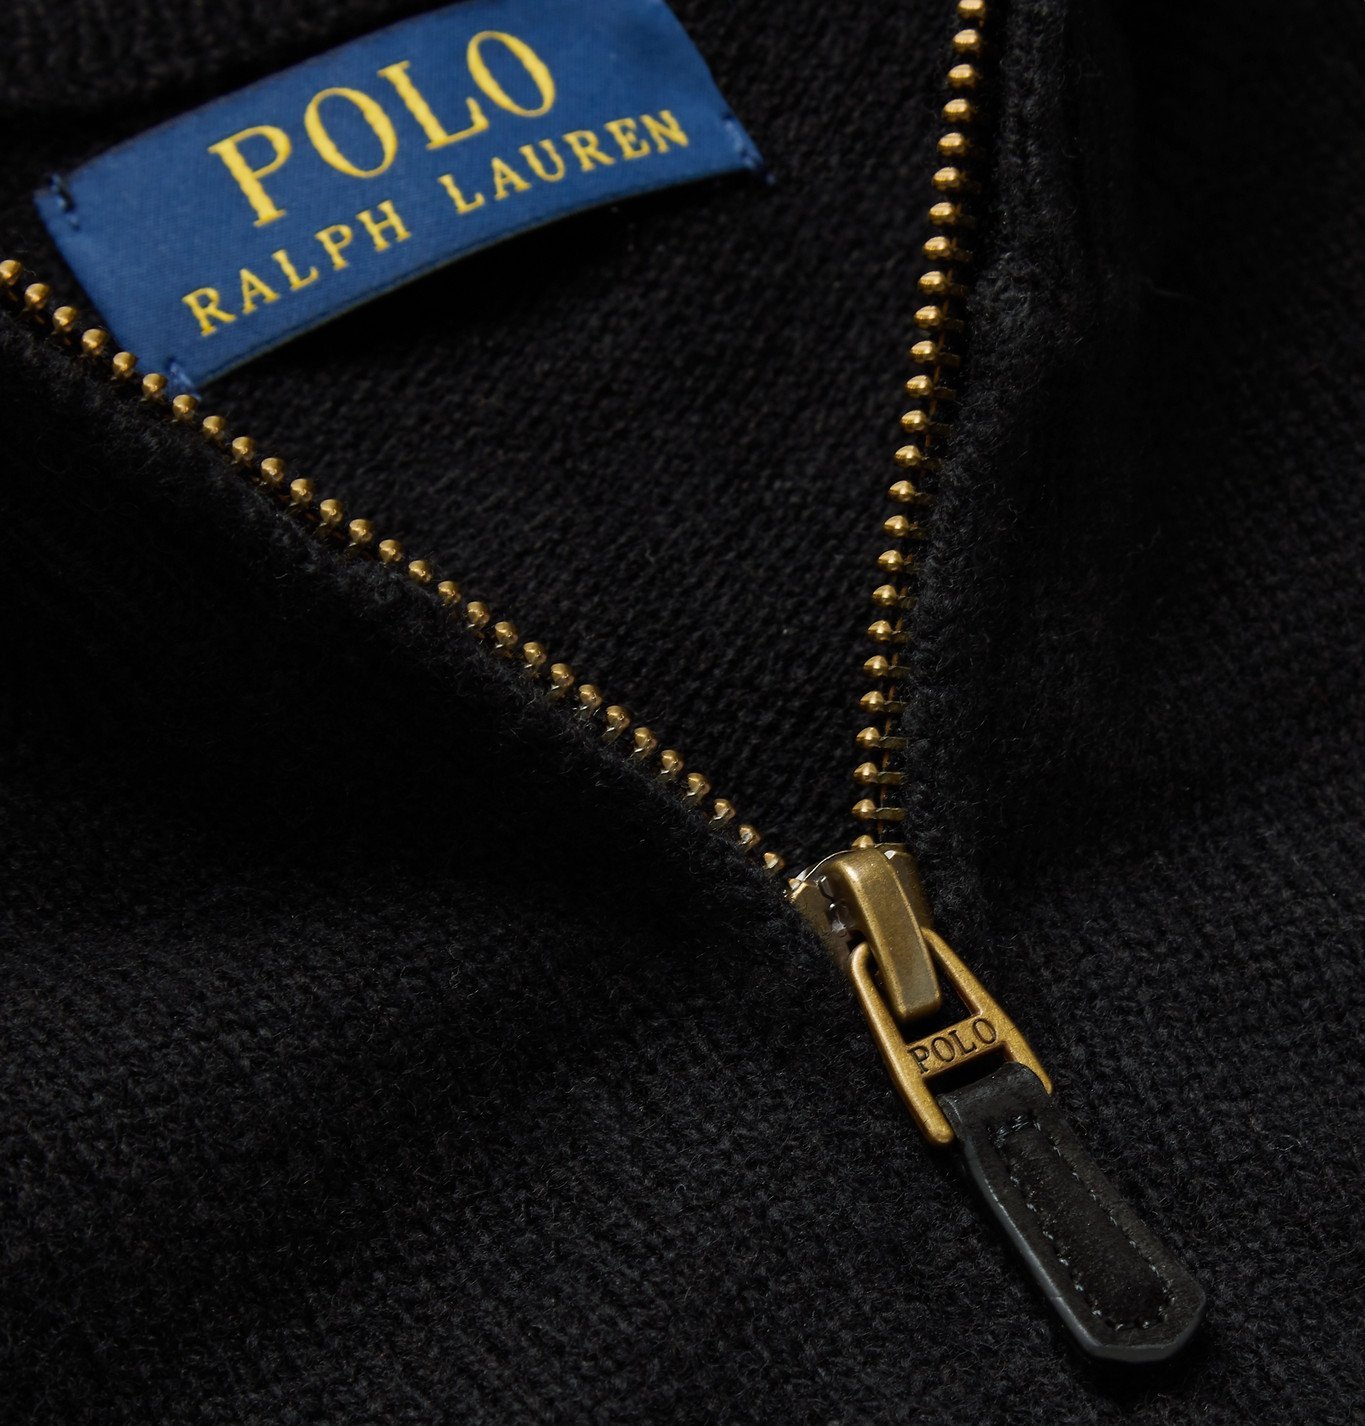 POLO RALPH LAUREN - Appliquéd Wool and Cashmere-Blend Half-Zip Sweater -  Black Polo Ralph Lauren